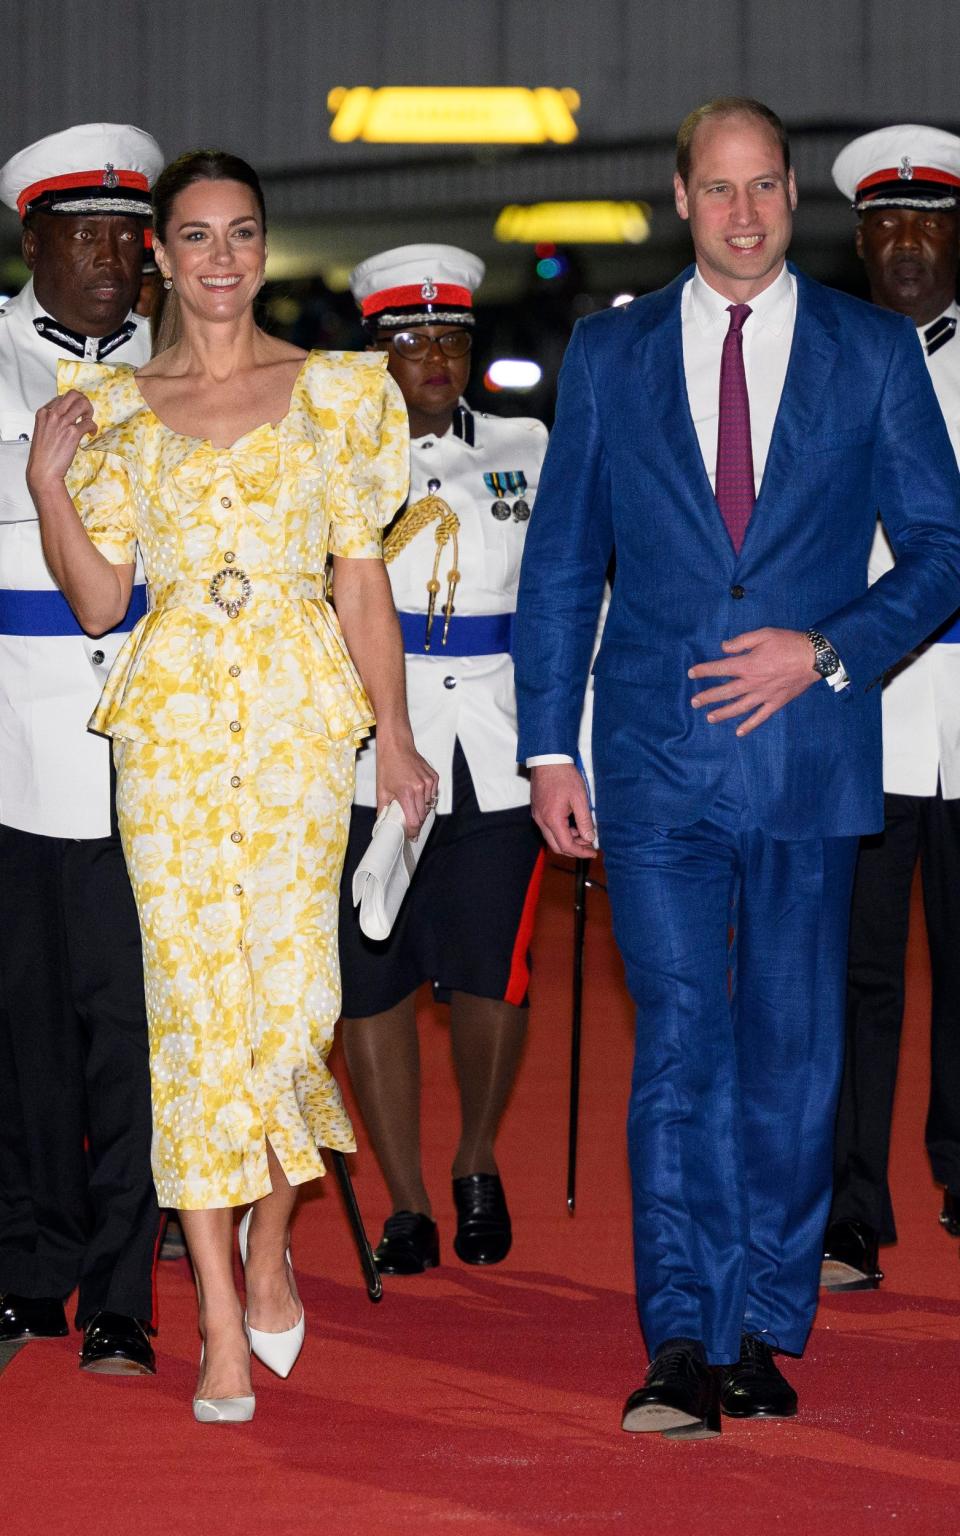 Dramatic details on Kate's Bahamas dress added an edge - Pool/Samir Hussein 